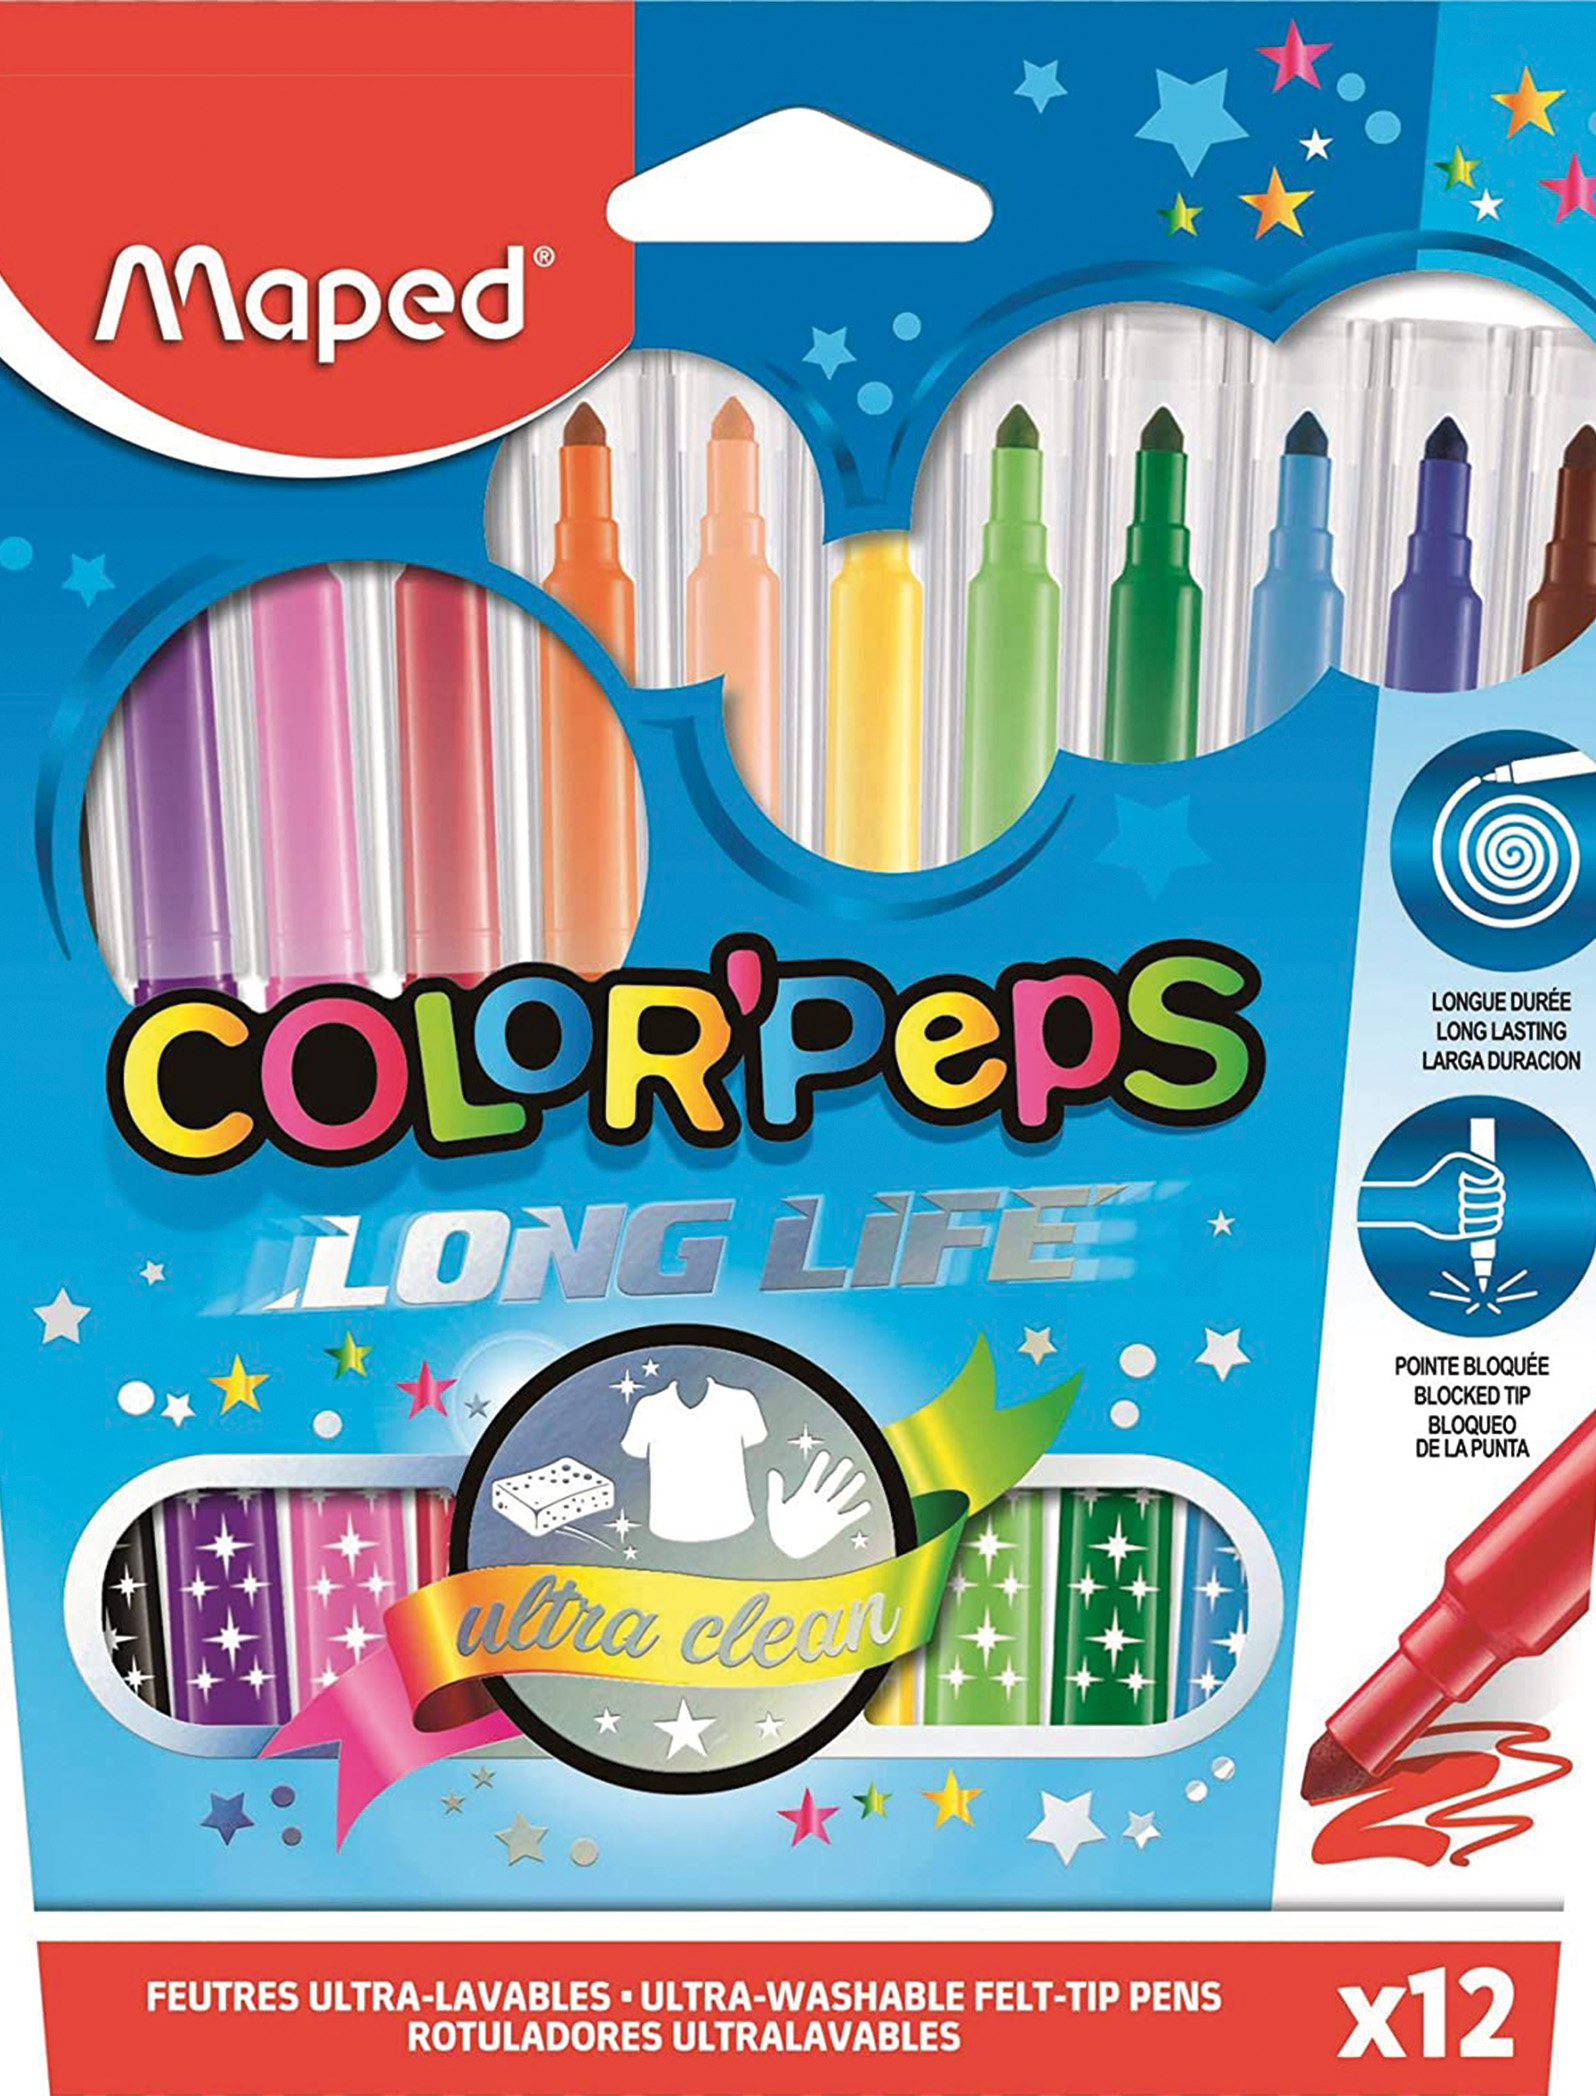 MAPED FELT TIPS COLOR'PEPS LONG LIFE X12 CARDBOARD BOX REF 845020